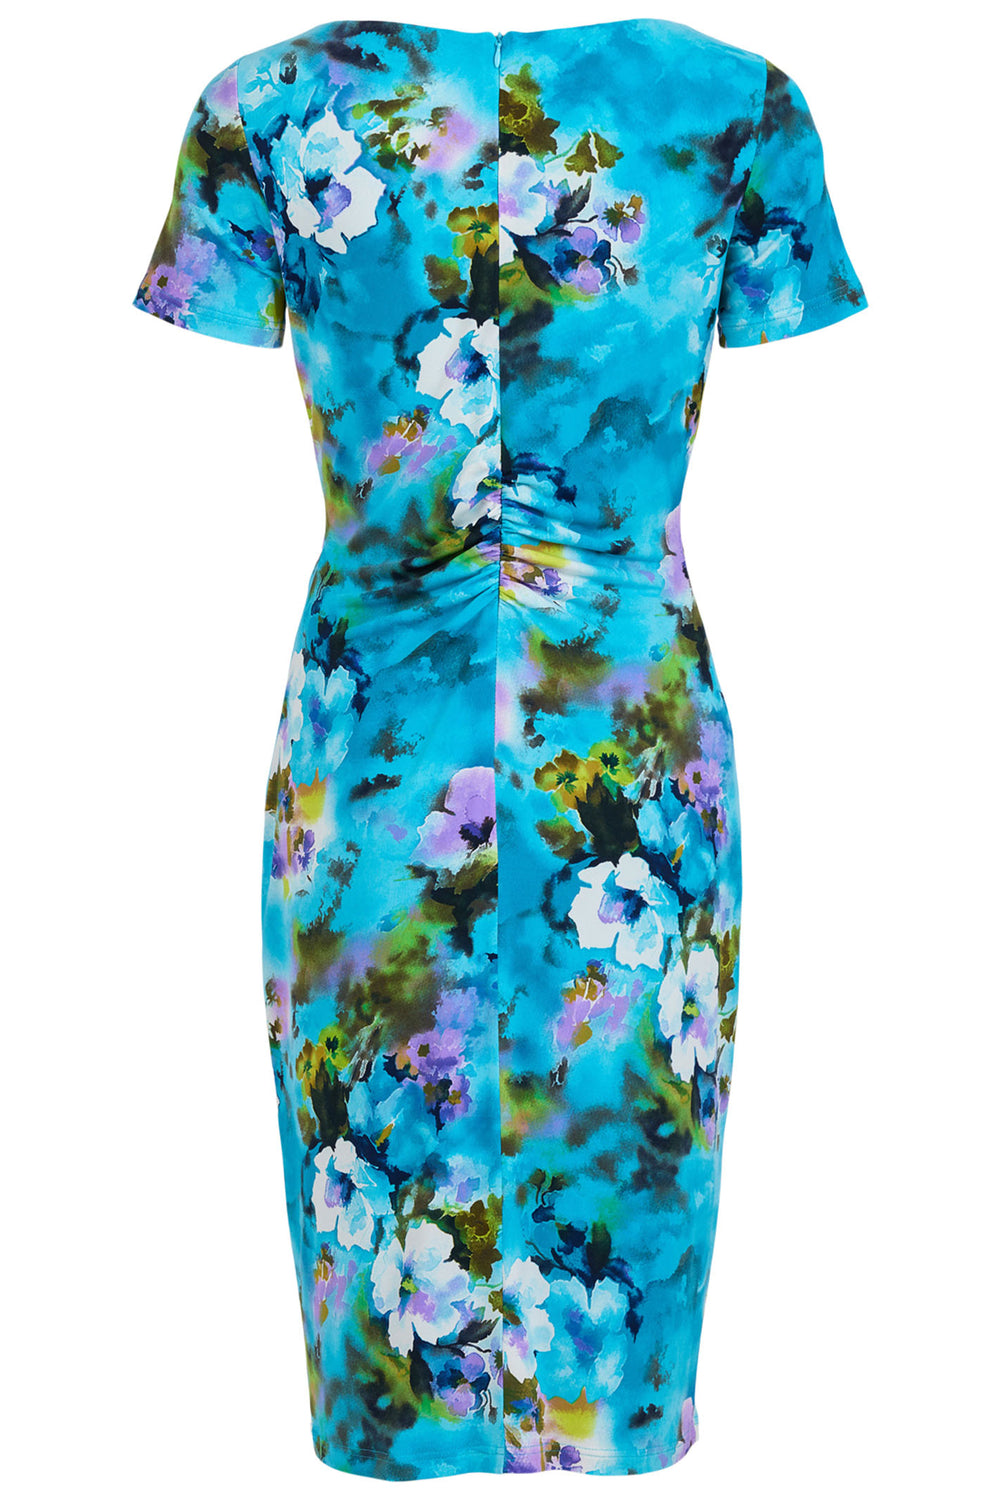 Tia London 78409 70 Turquoise Blue Floral Print Knot Waist Dress - Experience Boutique